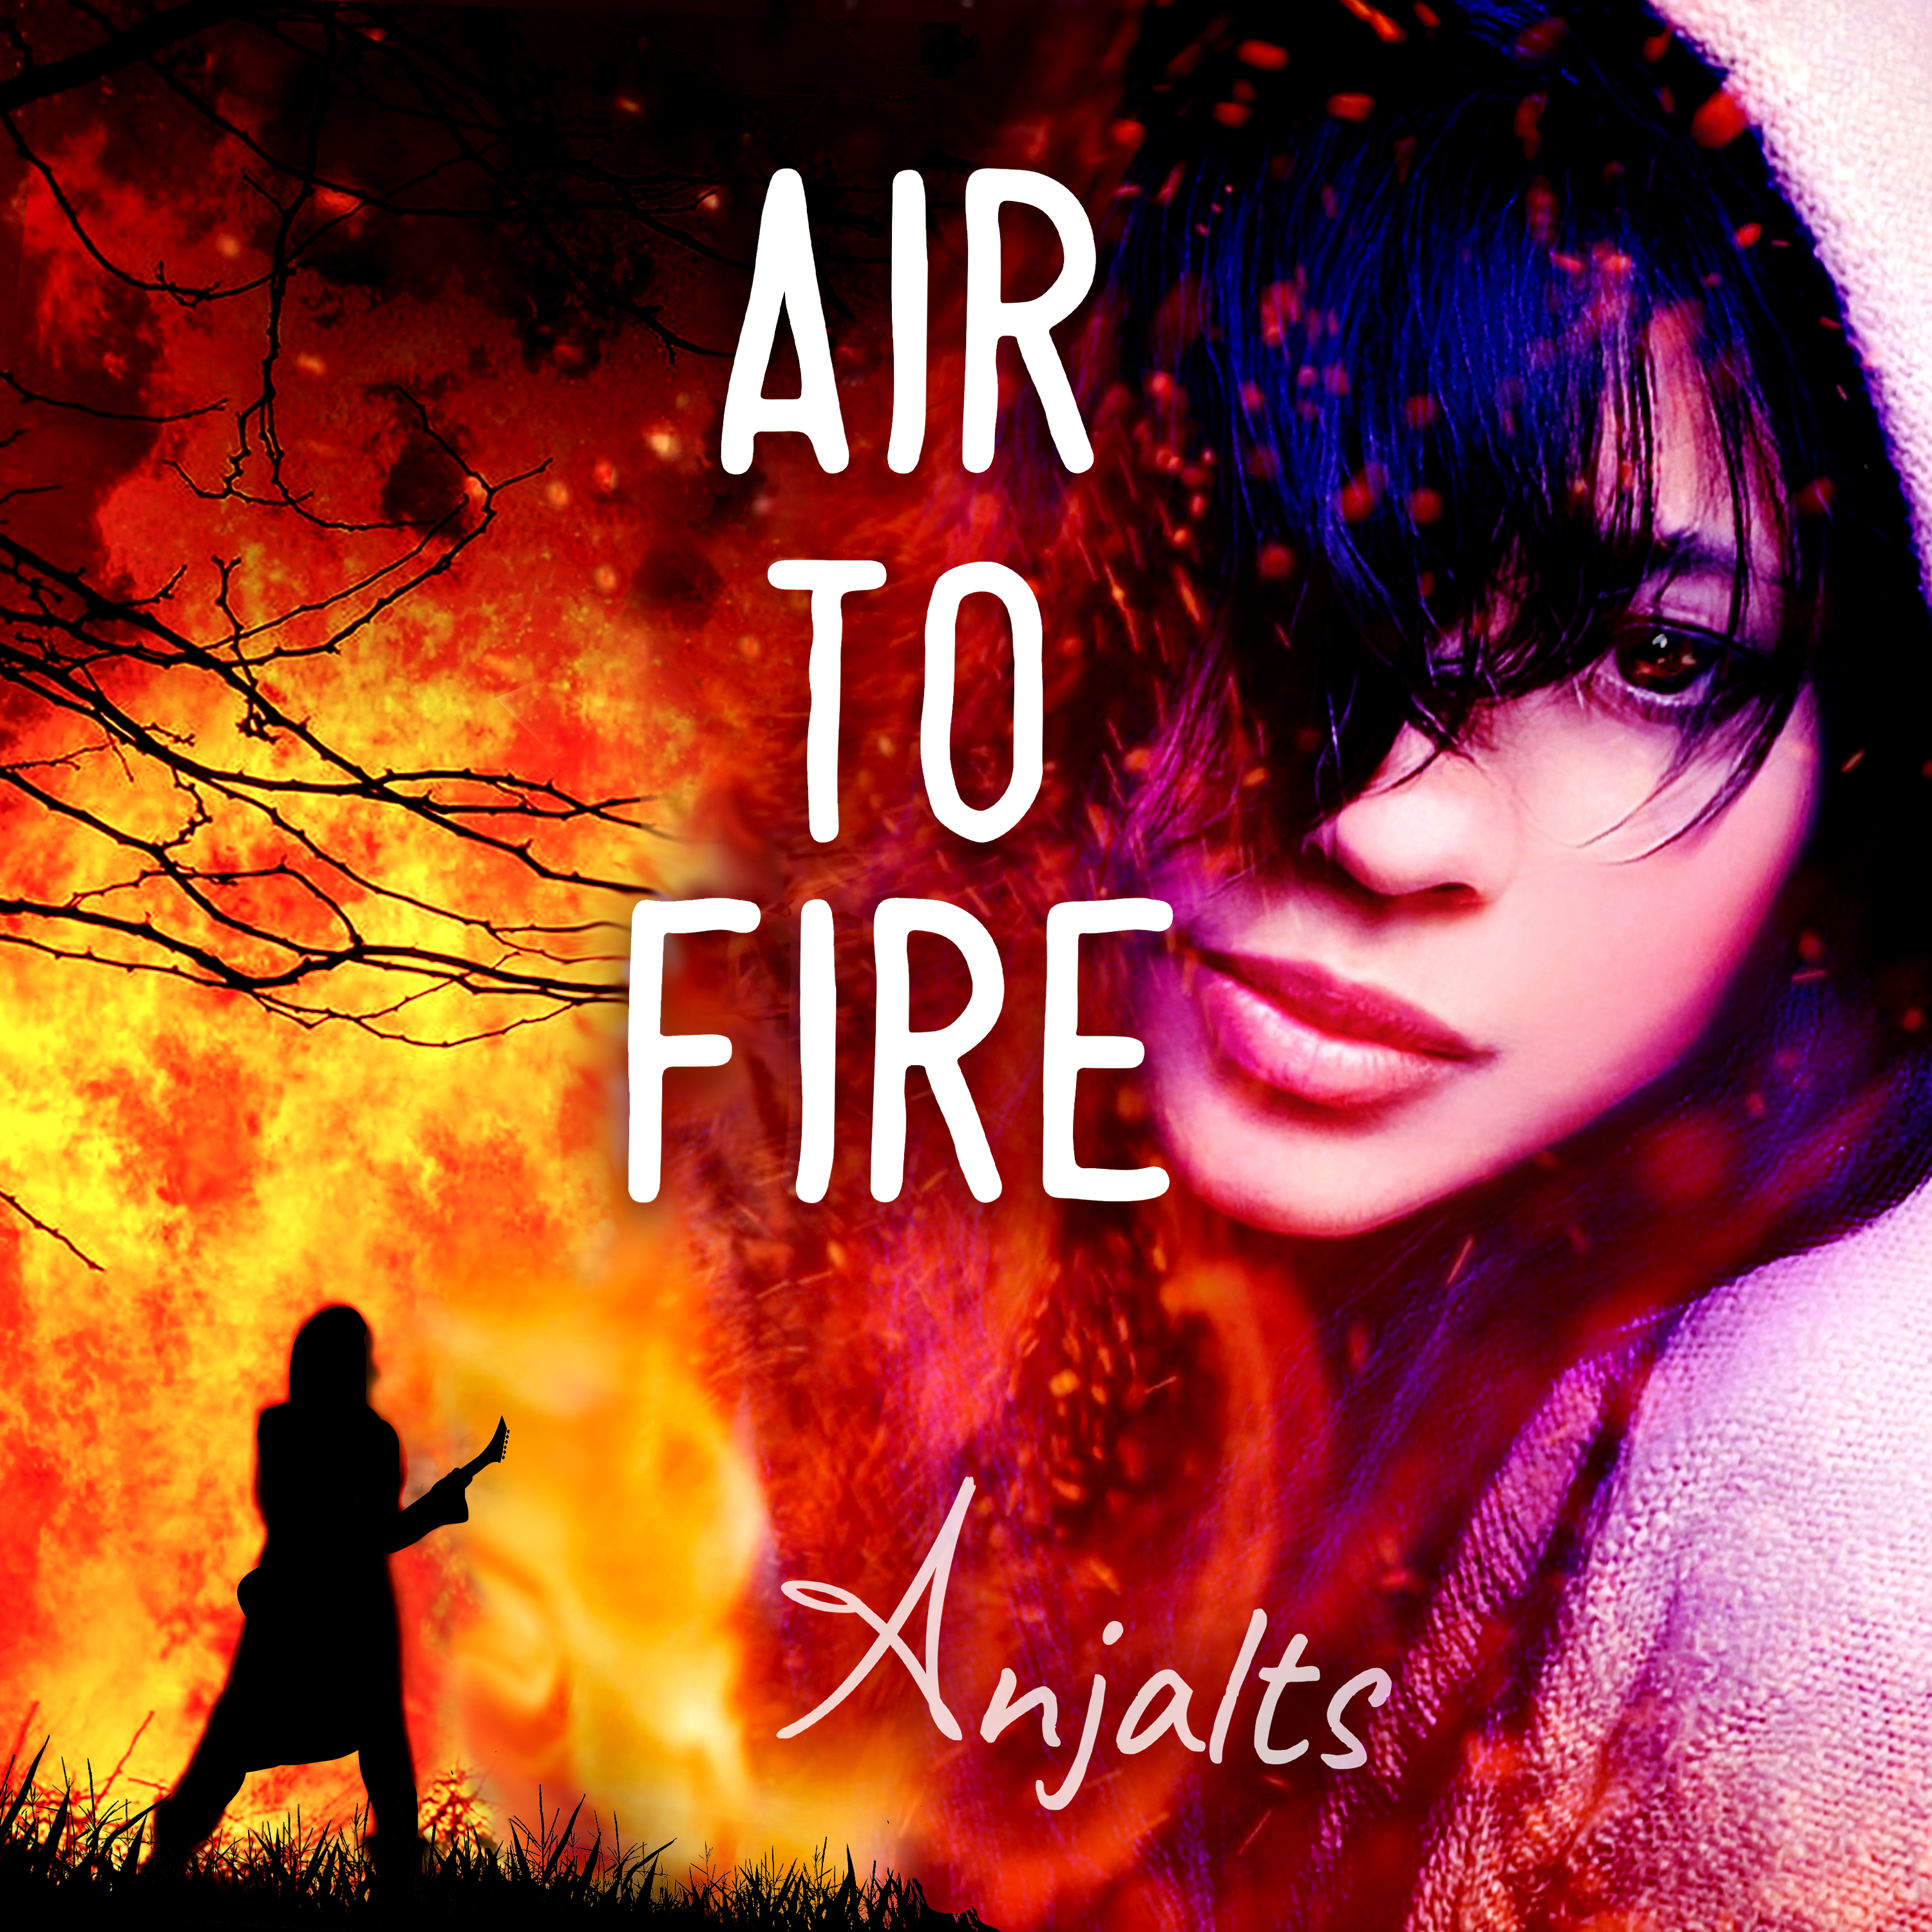 AIR TO FIRE anjalts album